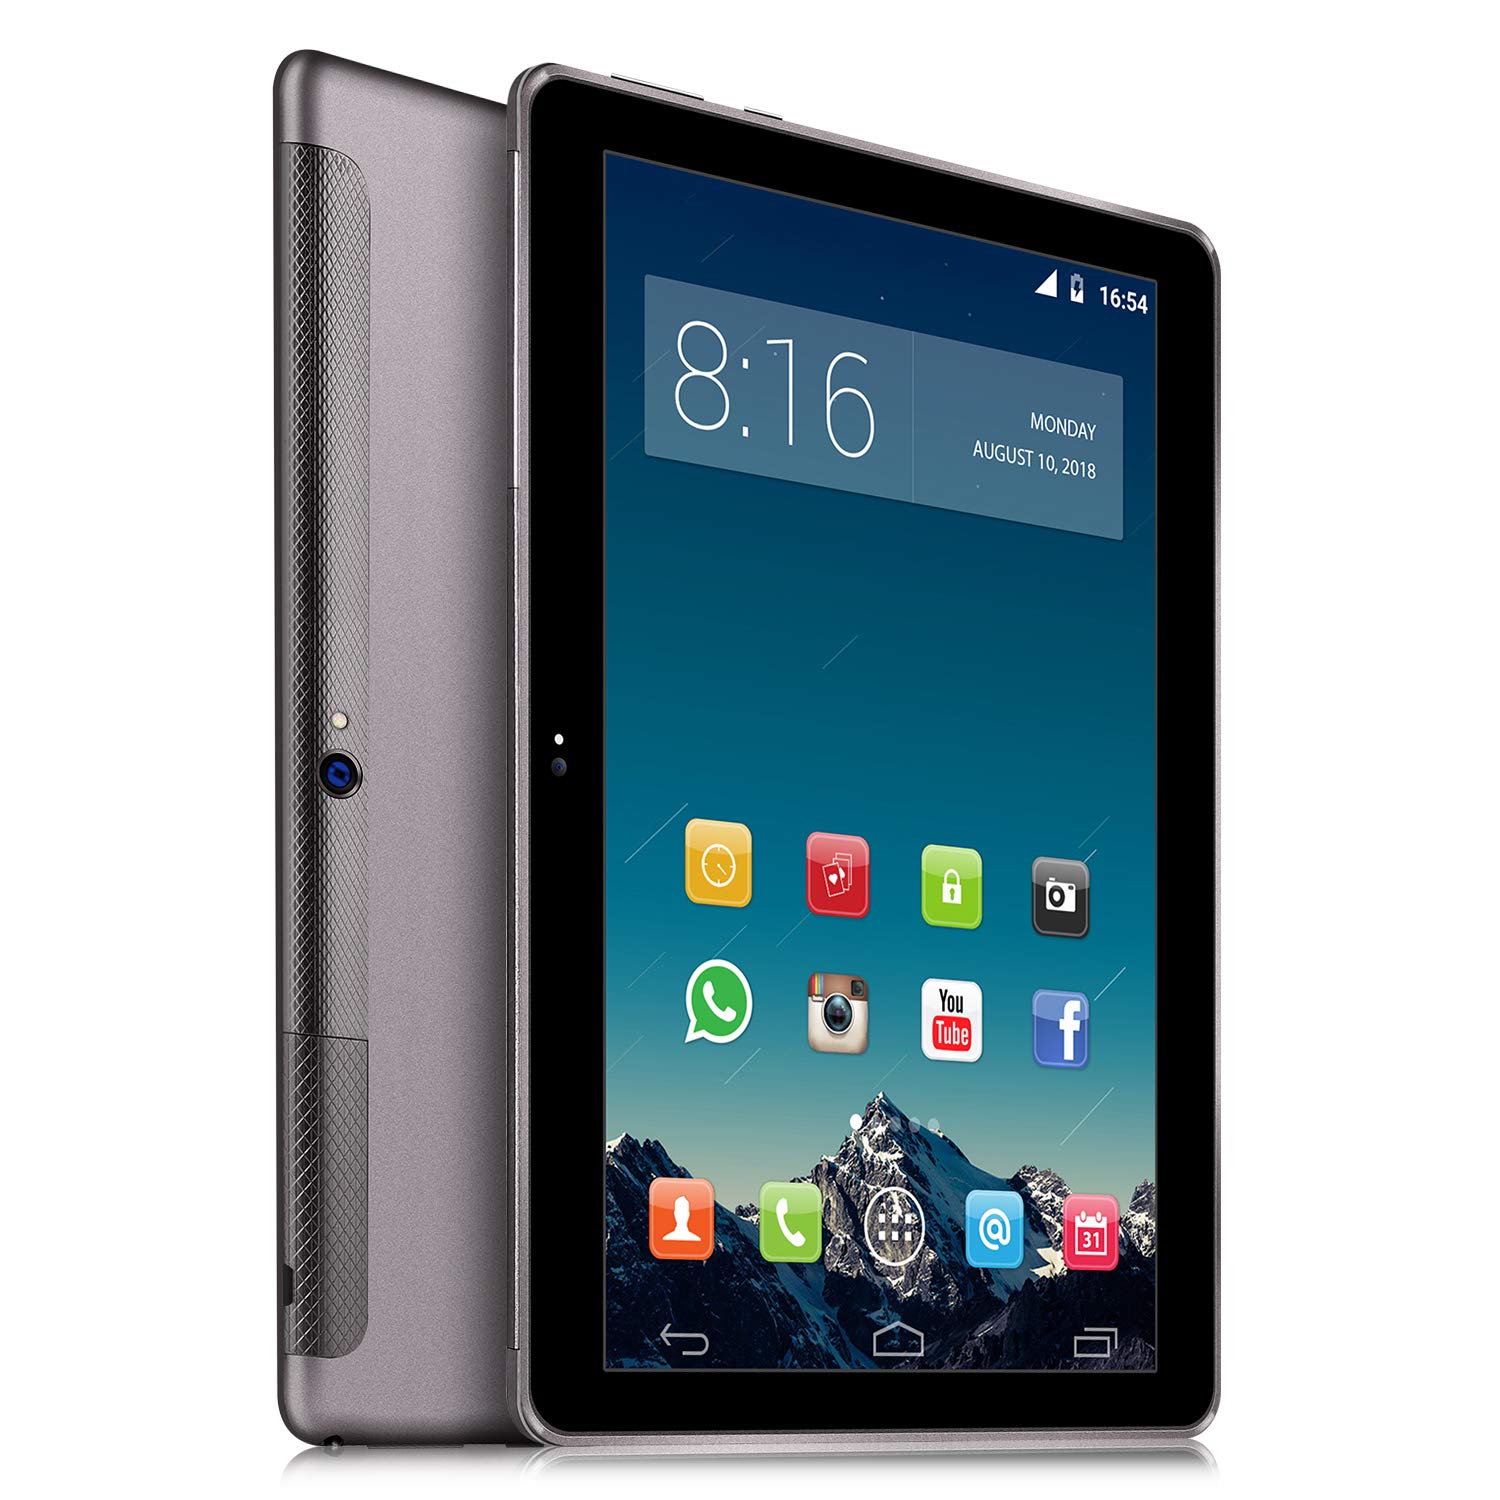 4G 10.1 "Inch Tablet - TOSCIDO W109 Android 7.0, Quad-Core, 4G Dual Sim Card, 32GB ROM, 2GB RAM, WiFi / Bluetooth / GPS, Stereo – Gray